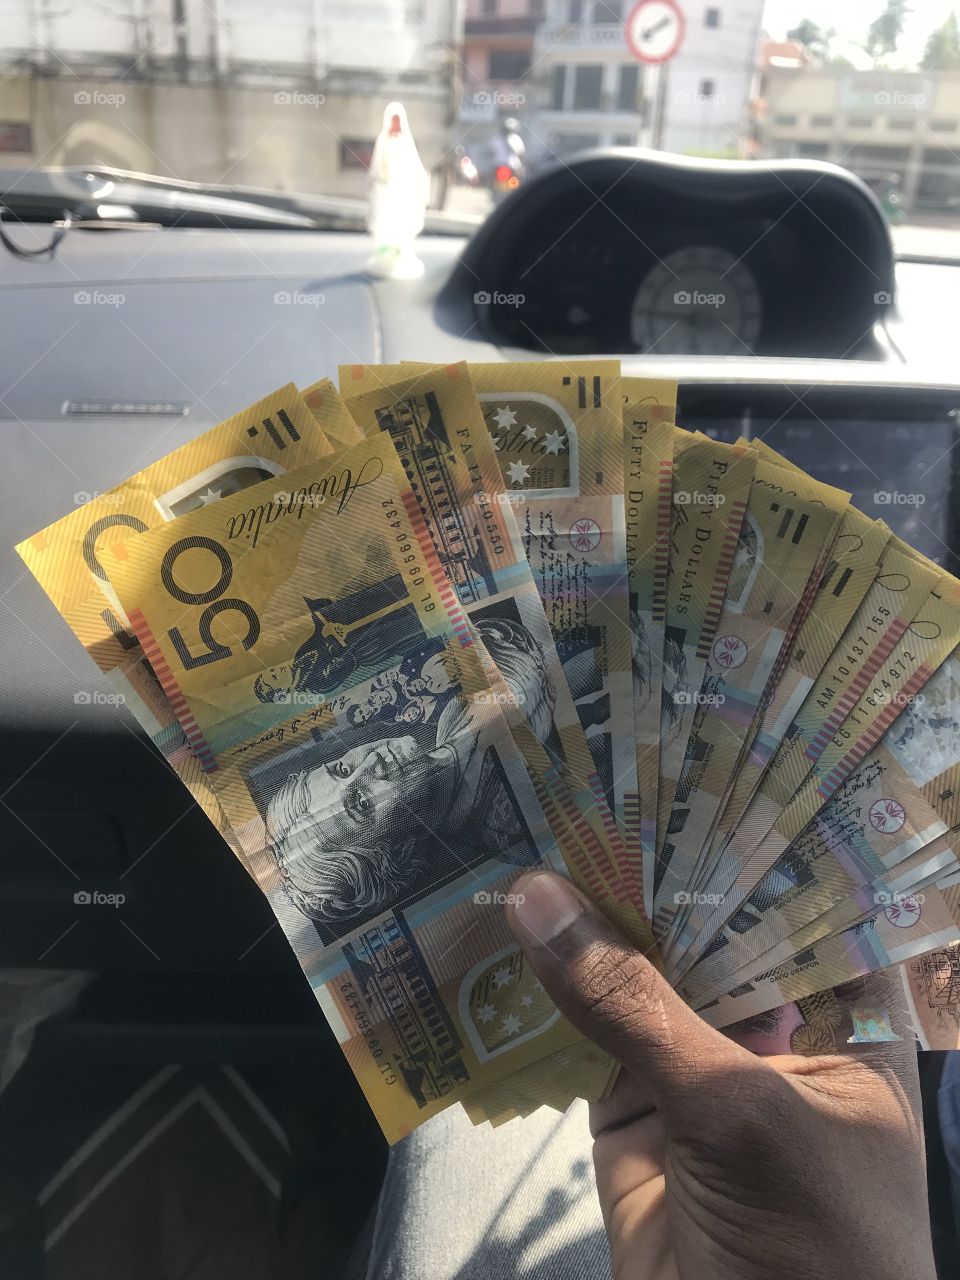 Change some moneys for AUS dollar 💵